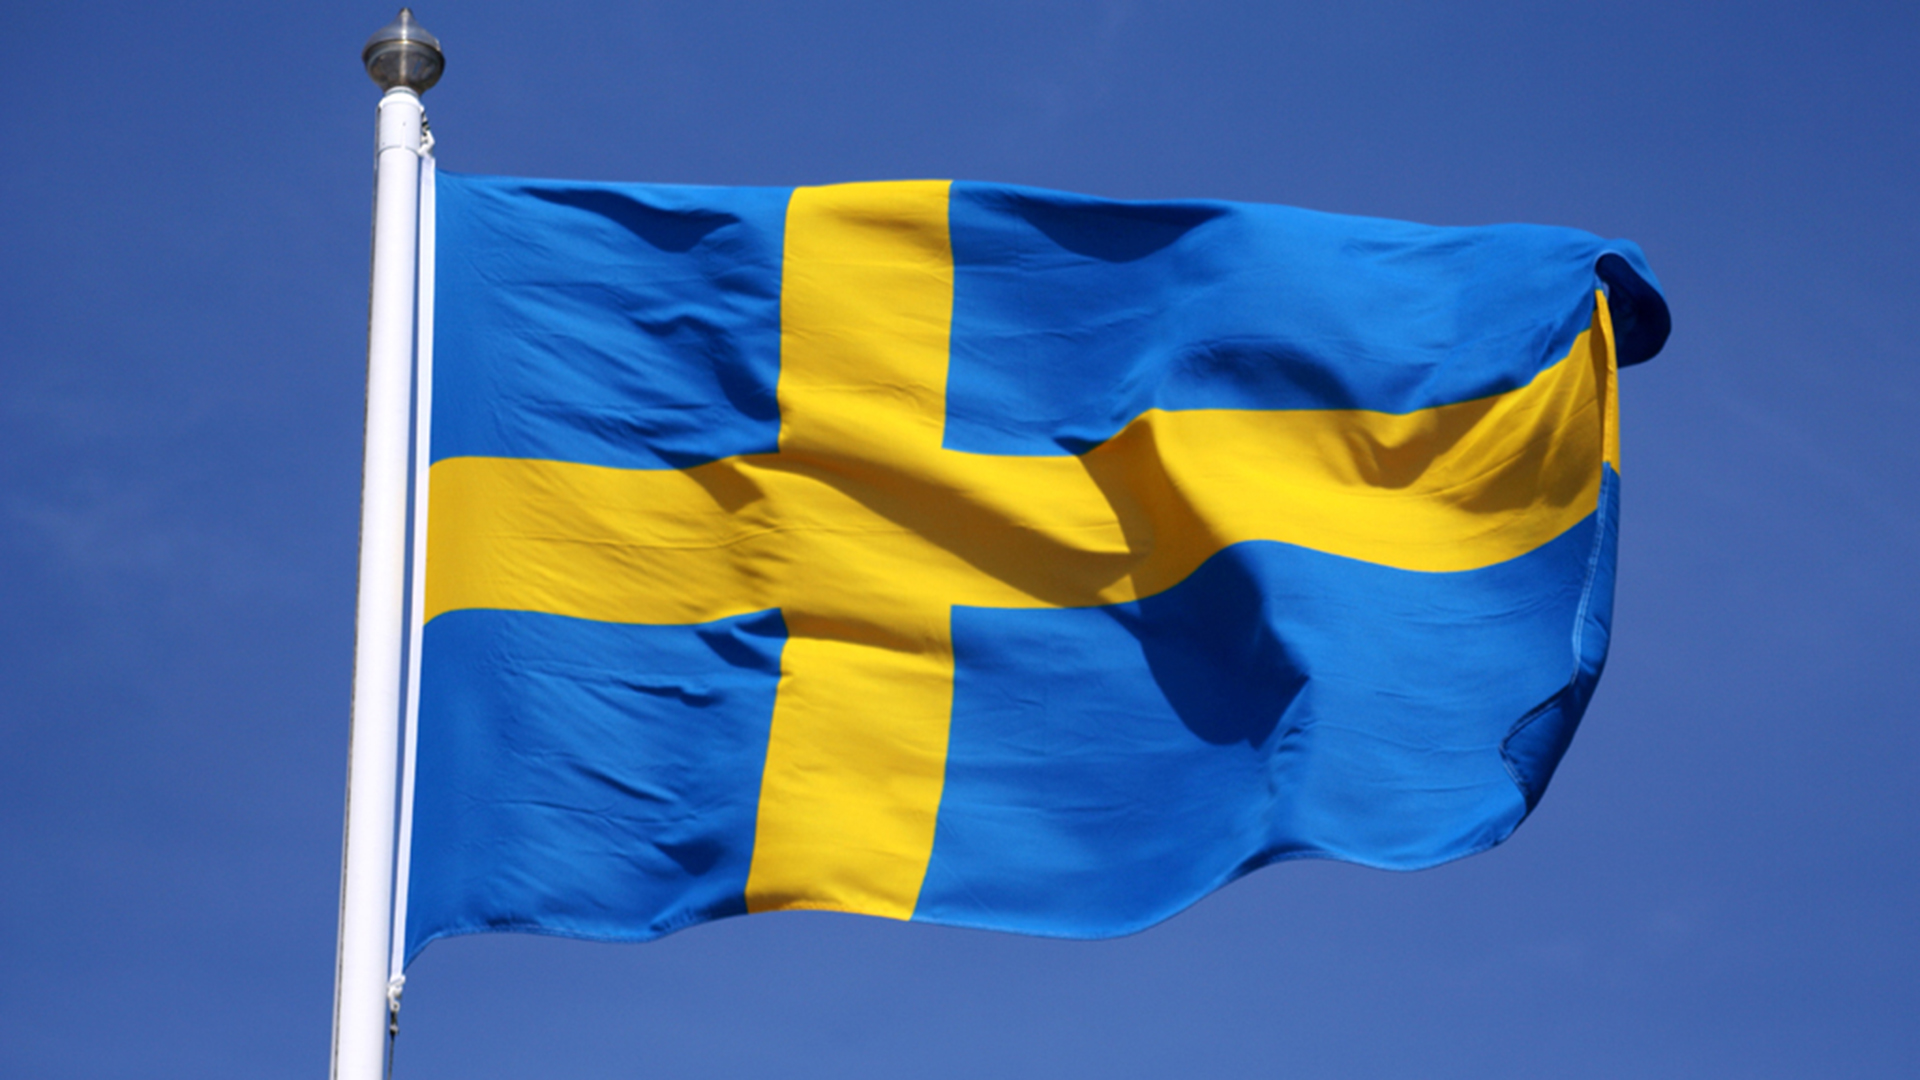 Flagge Schweden | picture alliance / Ralph Goldman